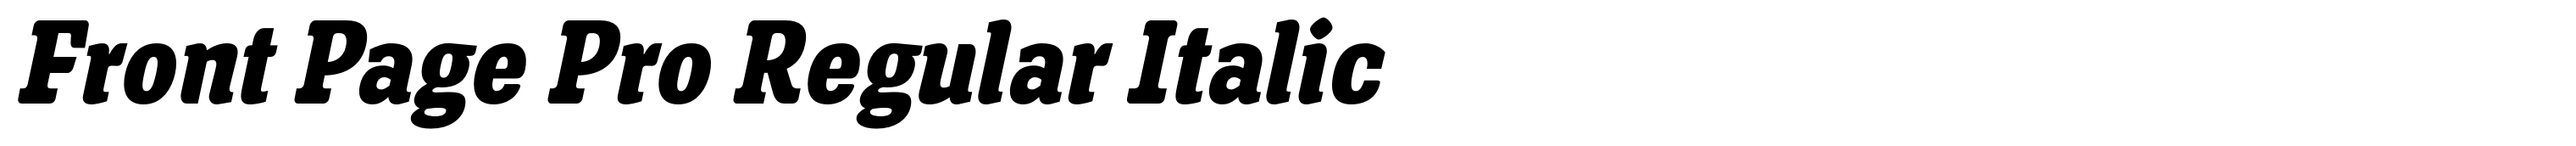 Front Page Pro Regular Italic